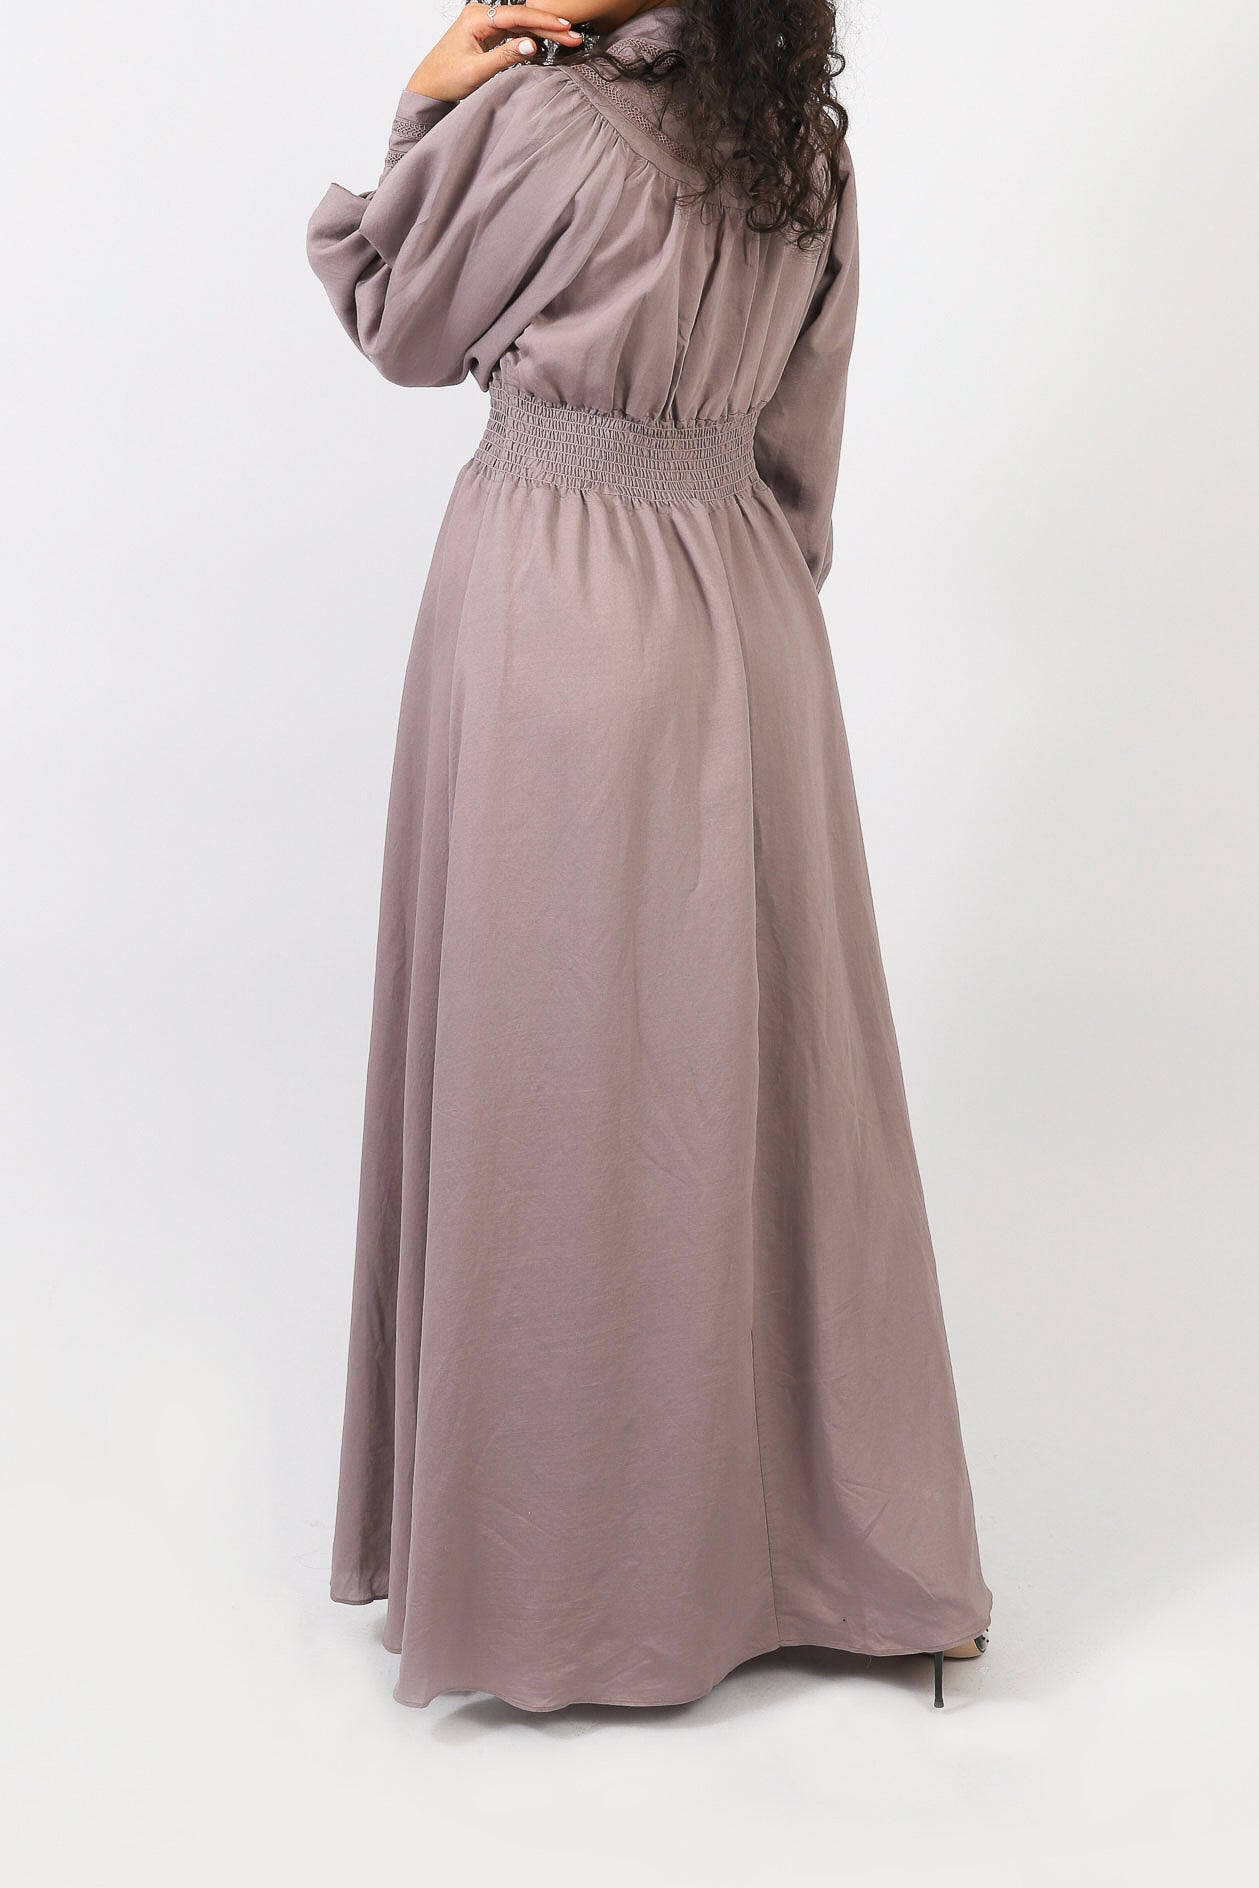 M7921DustyPink-dress-abaya